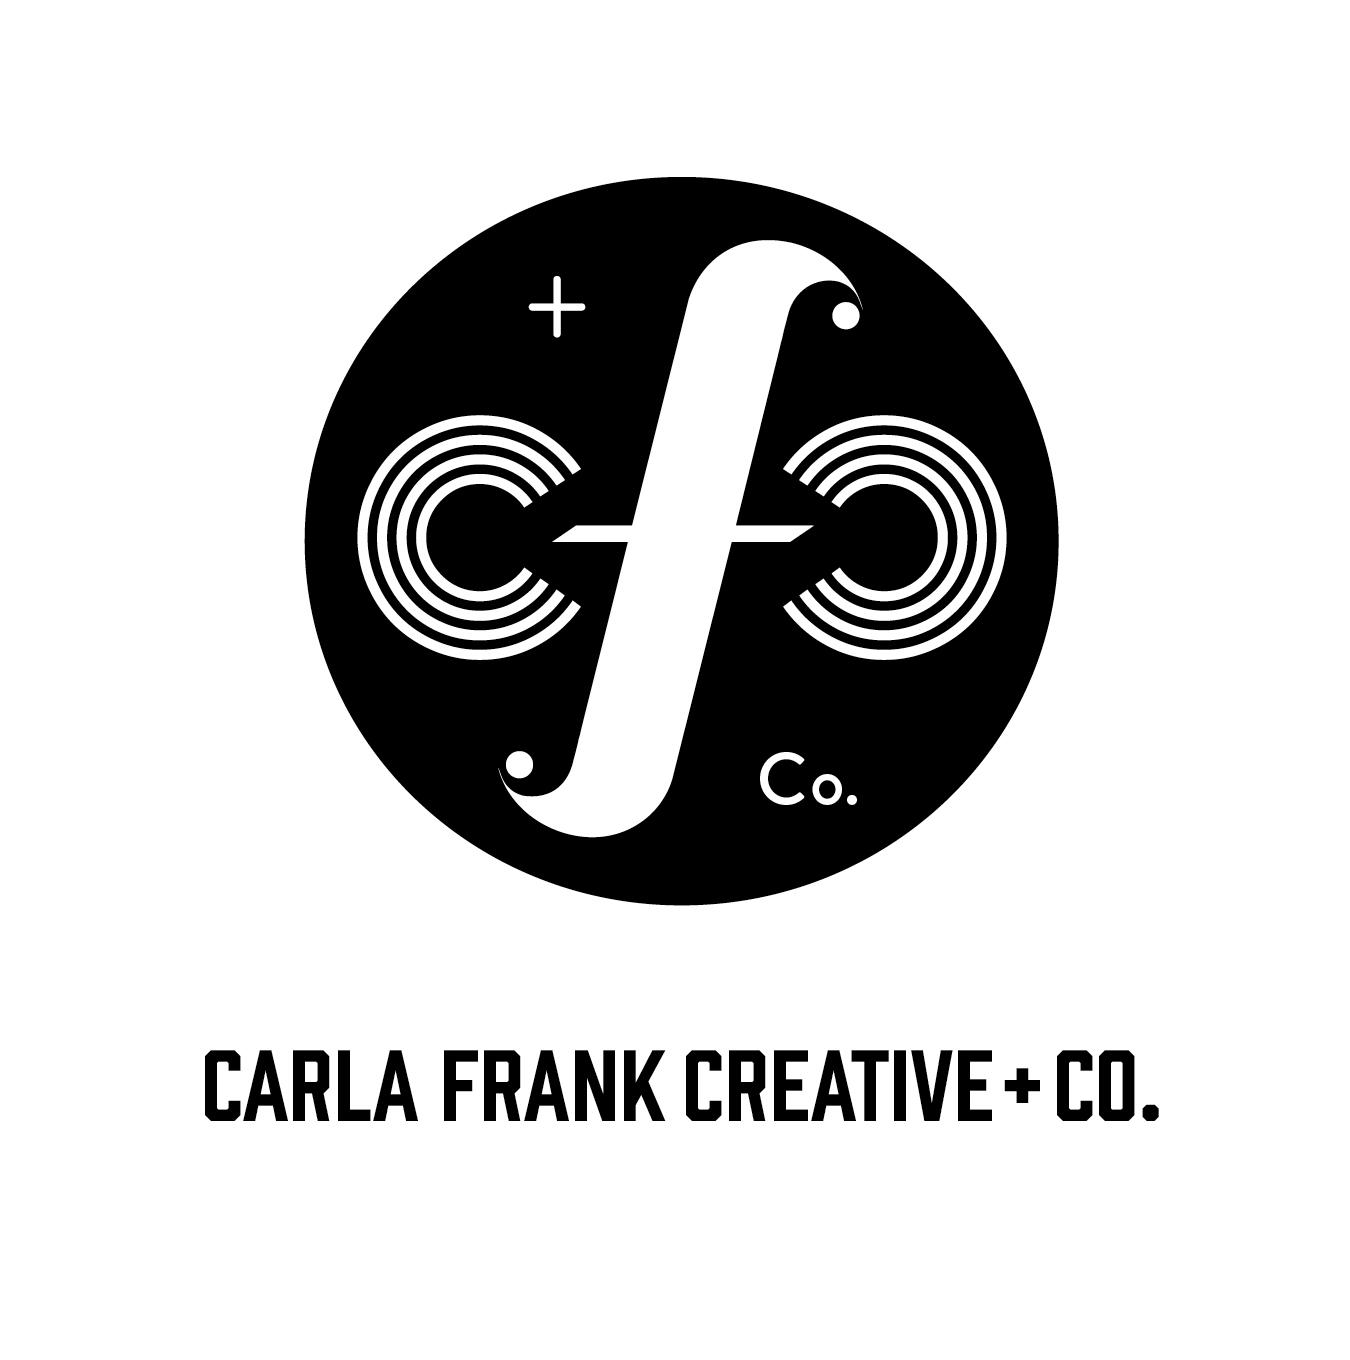 Carla Frank Creative+Co.